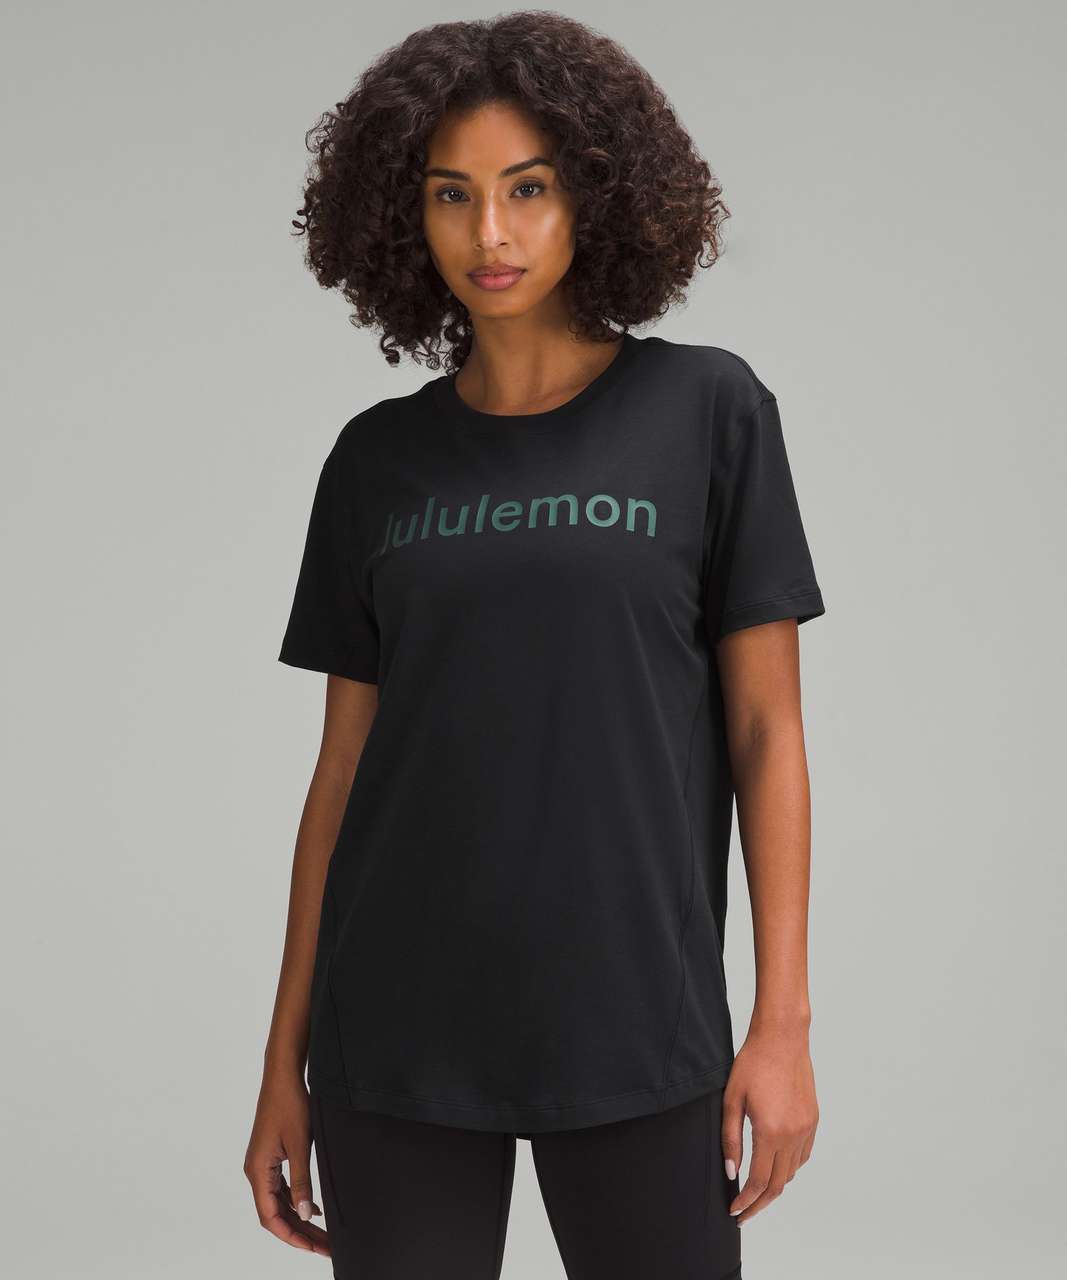 lululemon LICENSE TO TRAIN SHORT SLEEVE - Basic T-shirt - dark